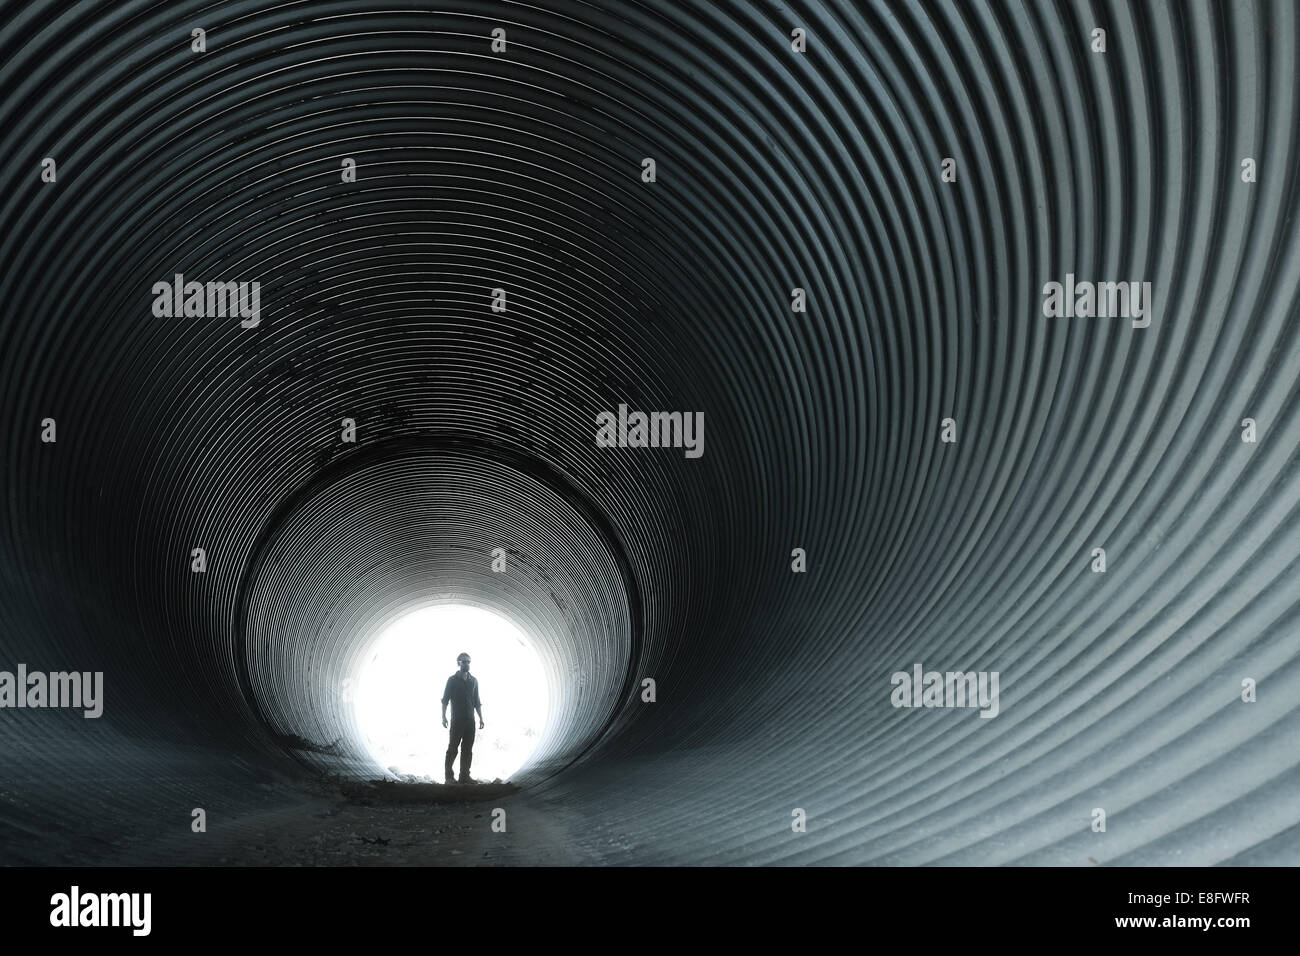 USA, Wyoming, Silhouette of man in circular tunnel Stock Photo